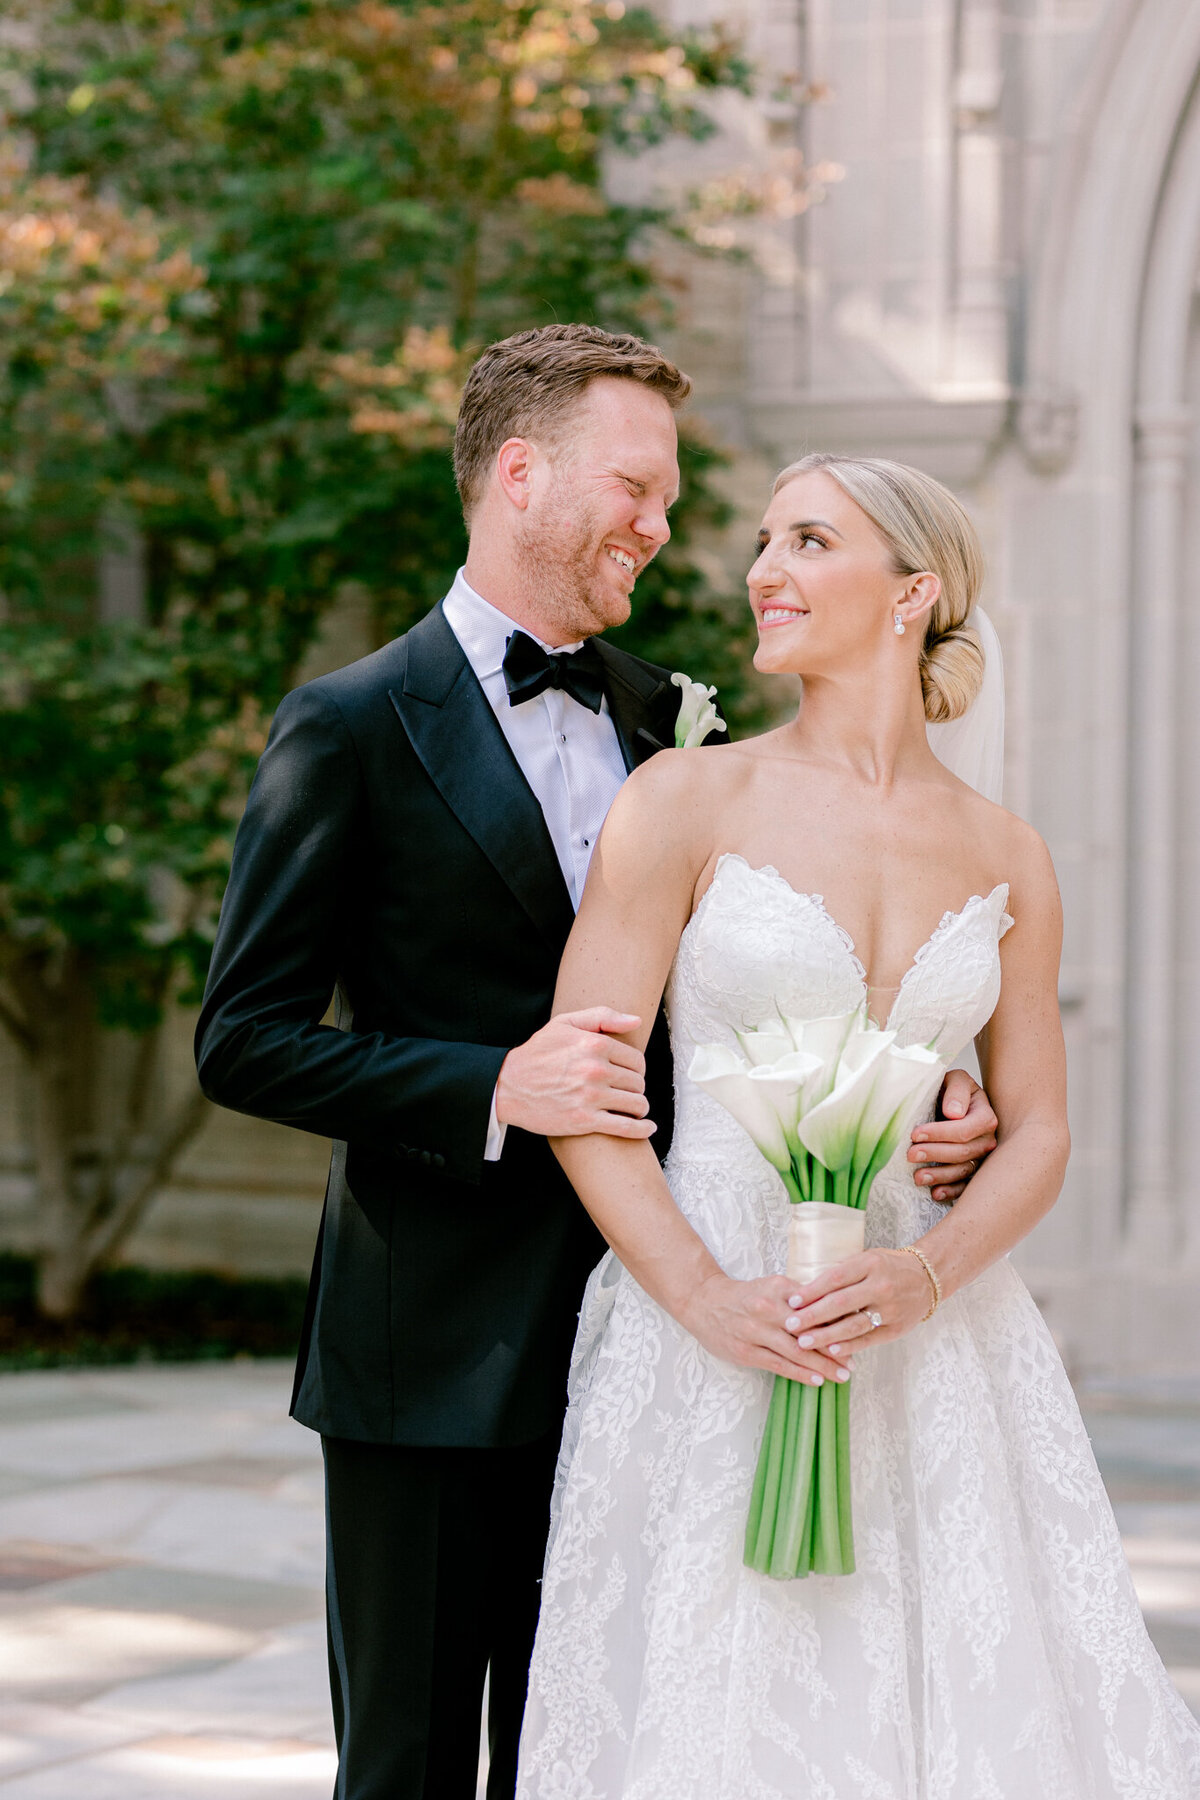 Katelyn & Kyle's Wedding at the Adolphus Hotel | Dallas Wedding Photographer | Sami Kathryn Photography-189